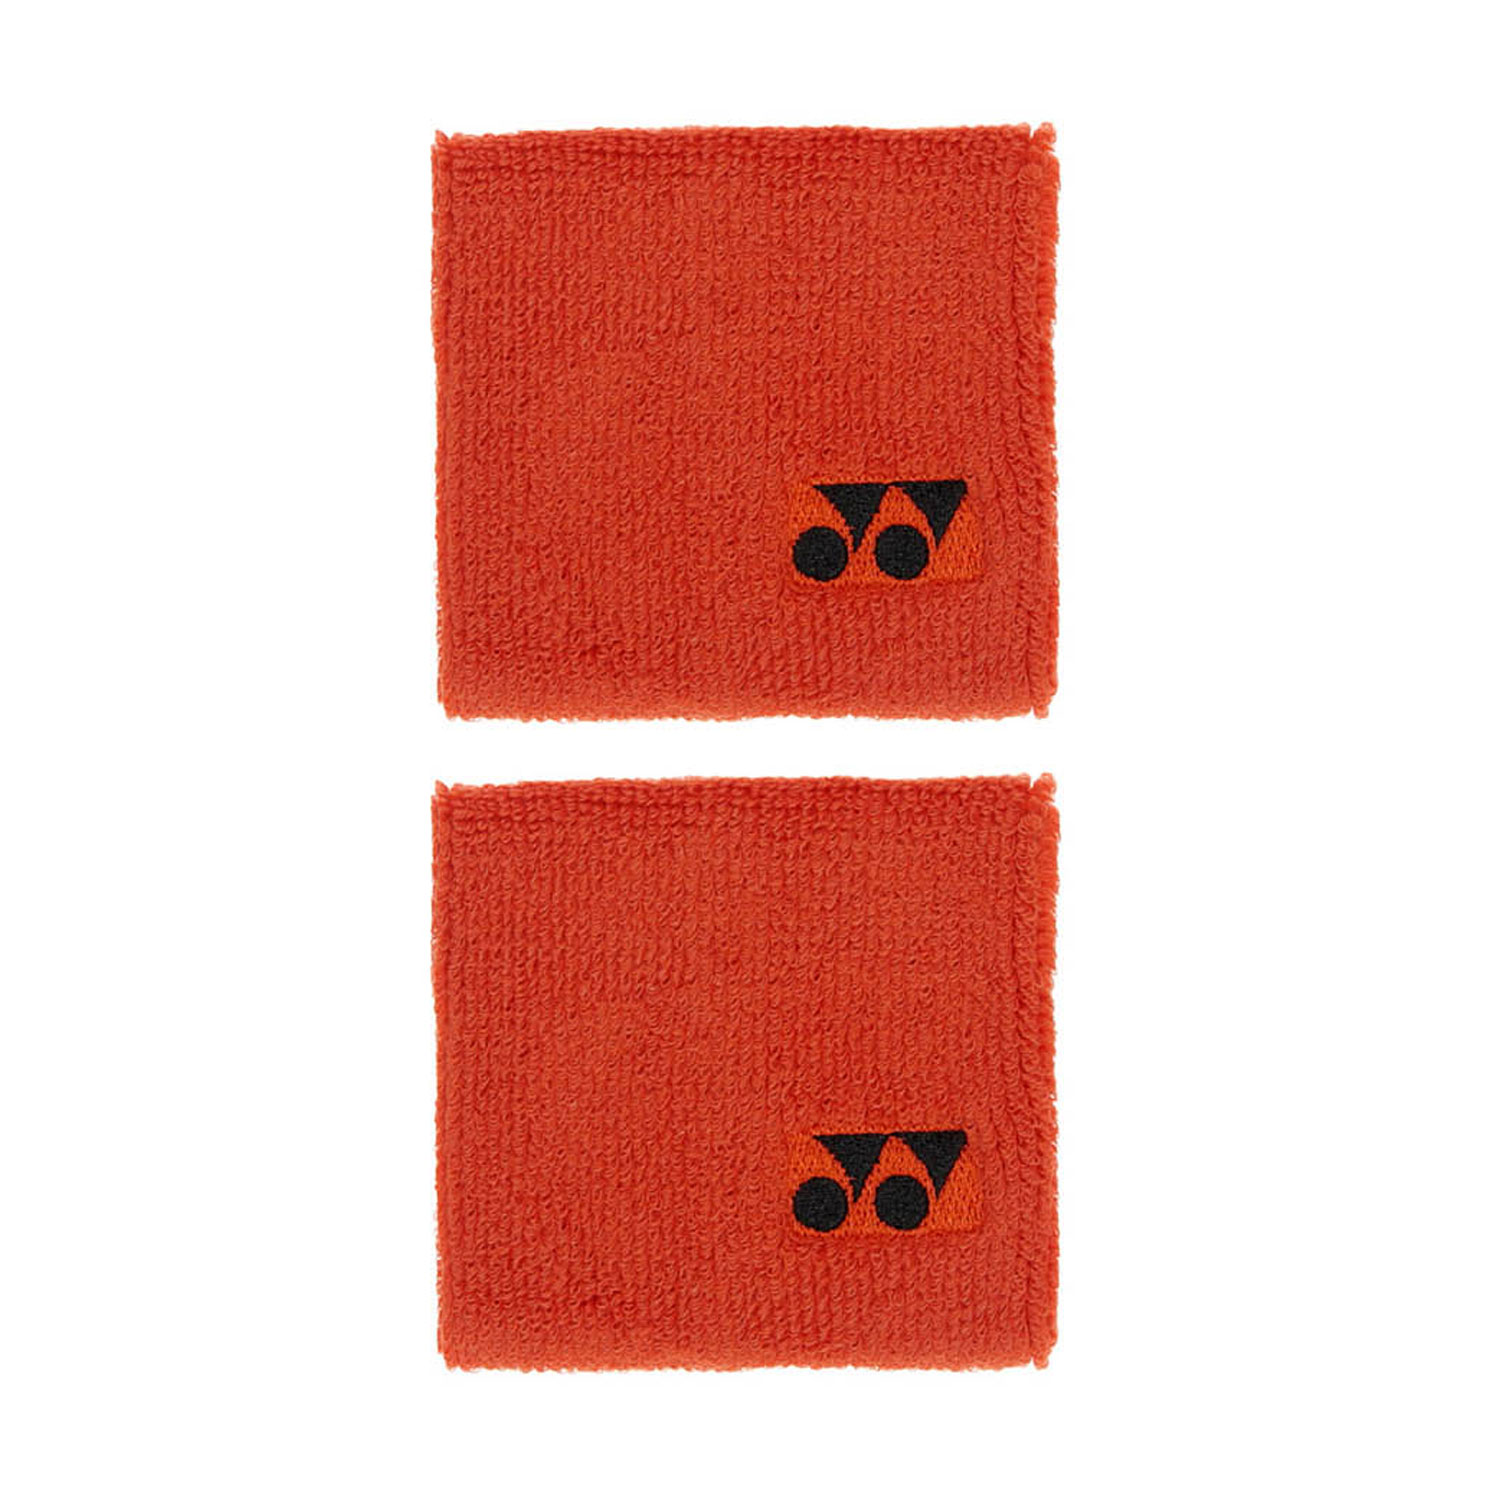 Yonex Logo Small Wristband - Orange